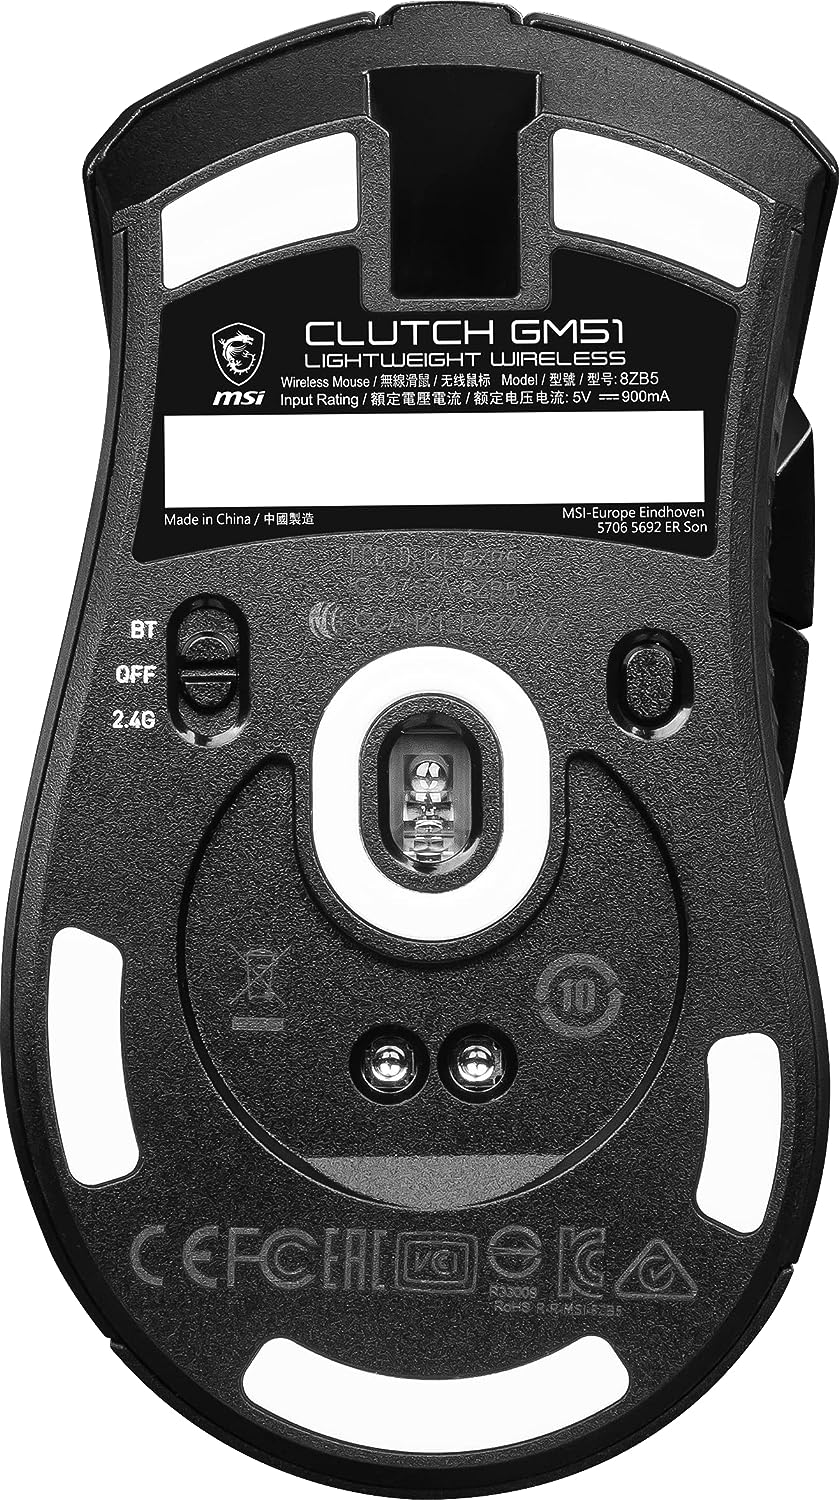 Test de la souris MSI Clutch GM51 Lightweight Wireless - LegolasGamer